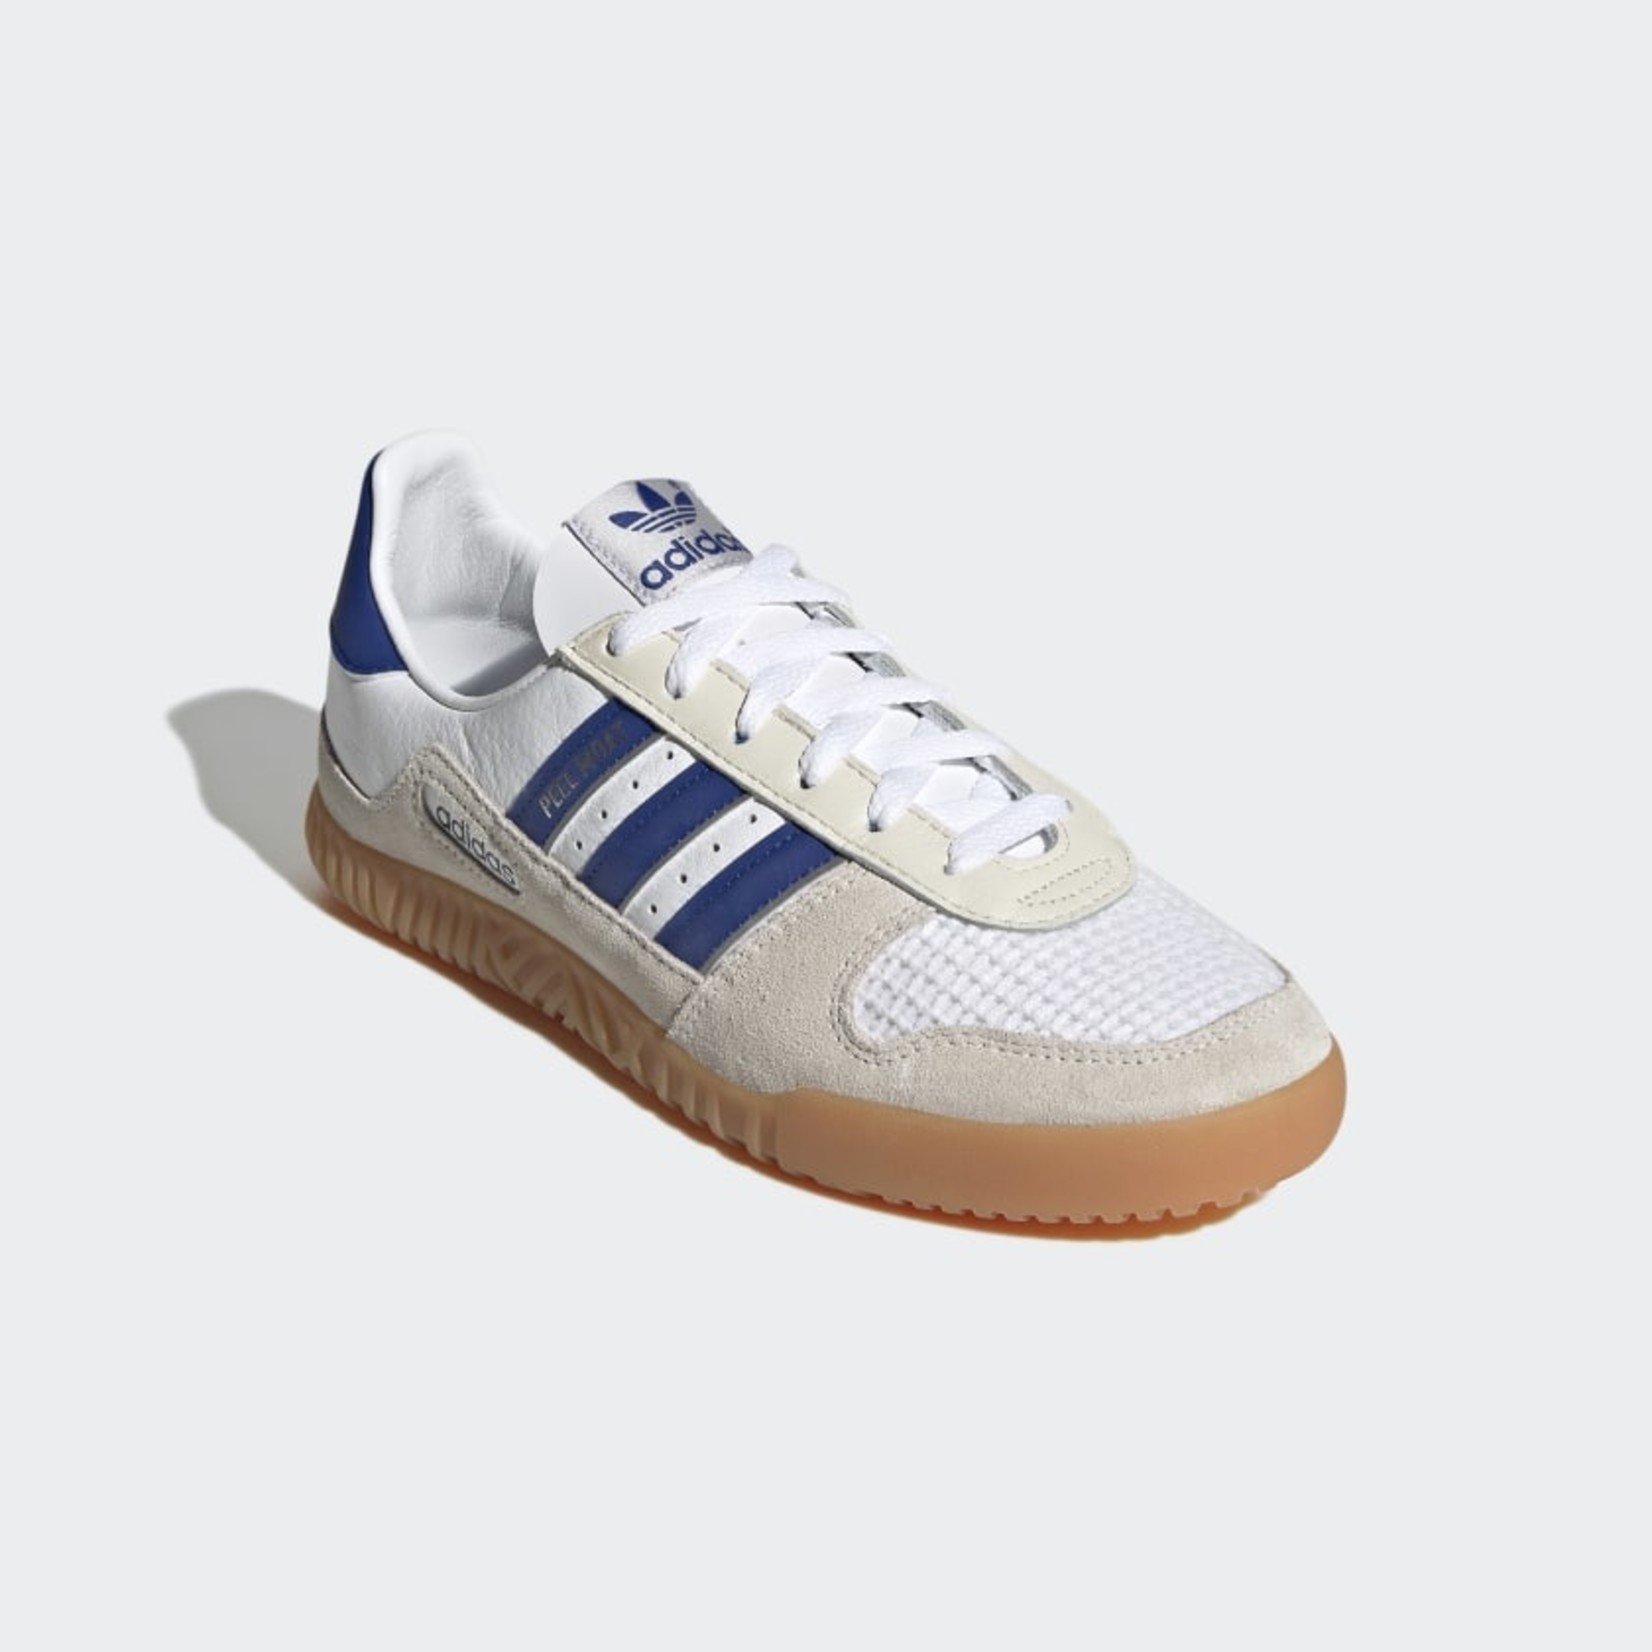 Adidas Indoor Comp Ftwwht/Royblu/Cwhite